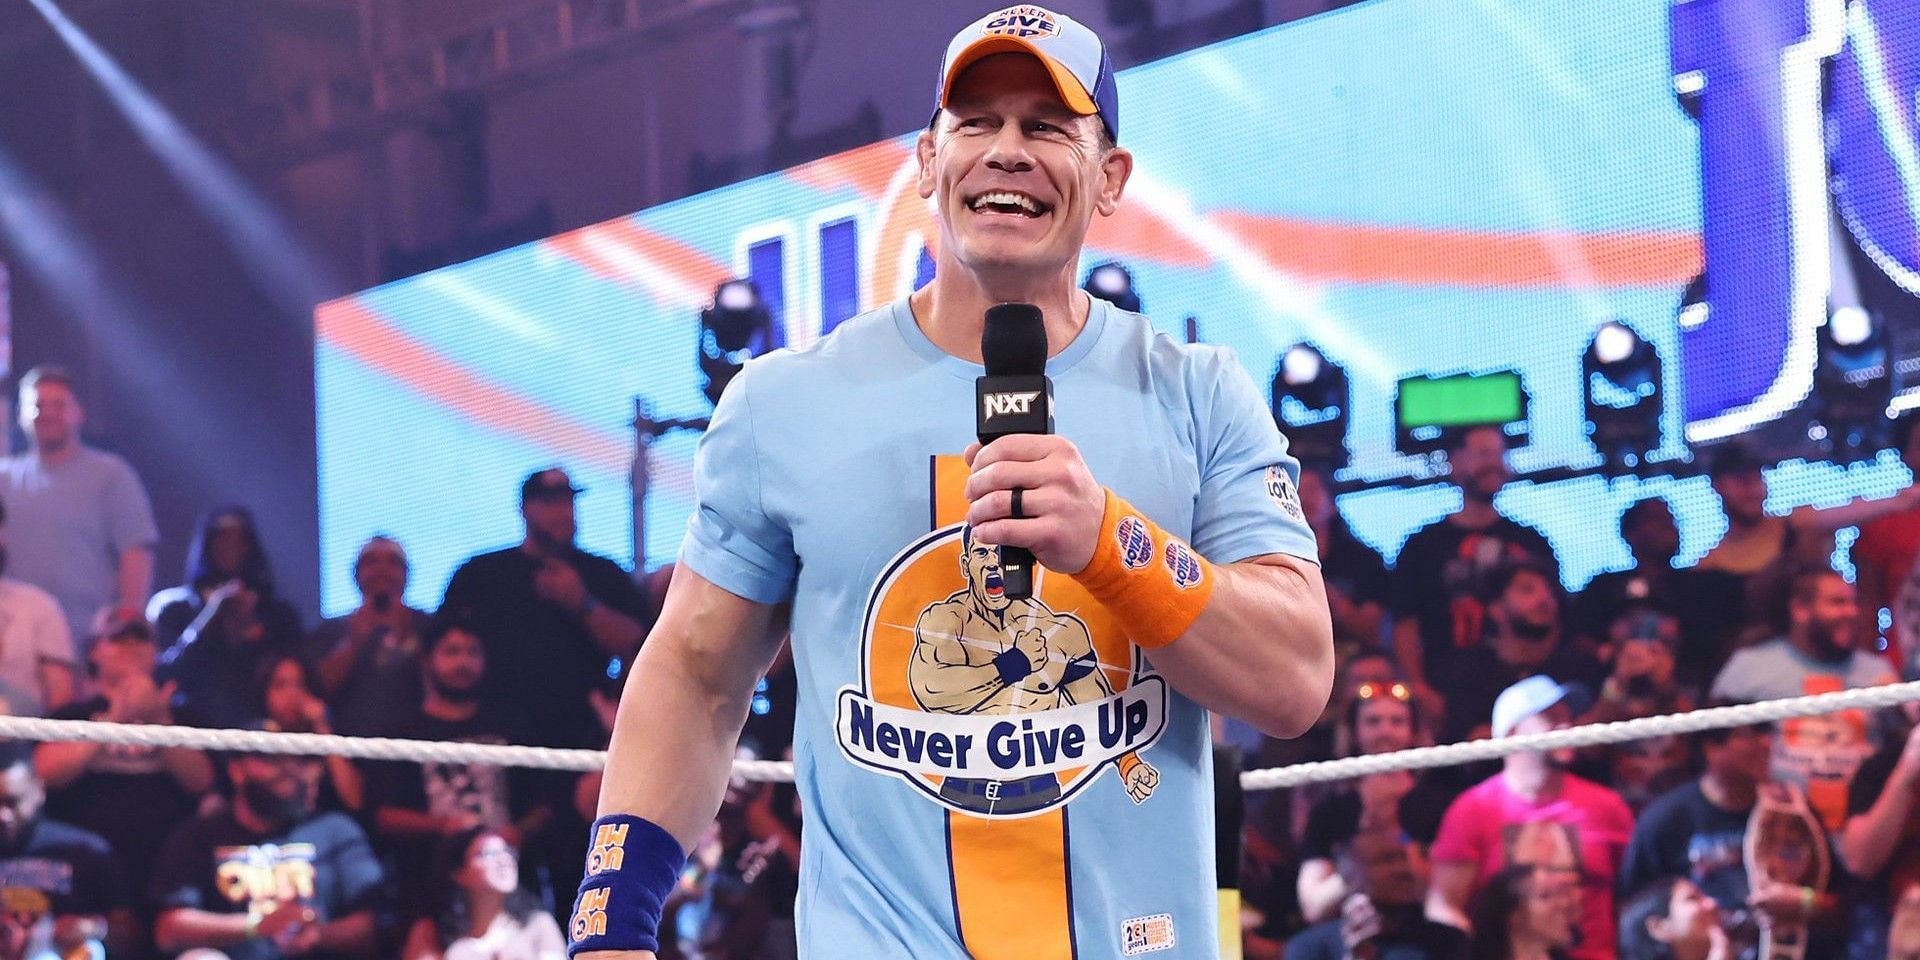 John Cena has commented on his retirement plans